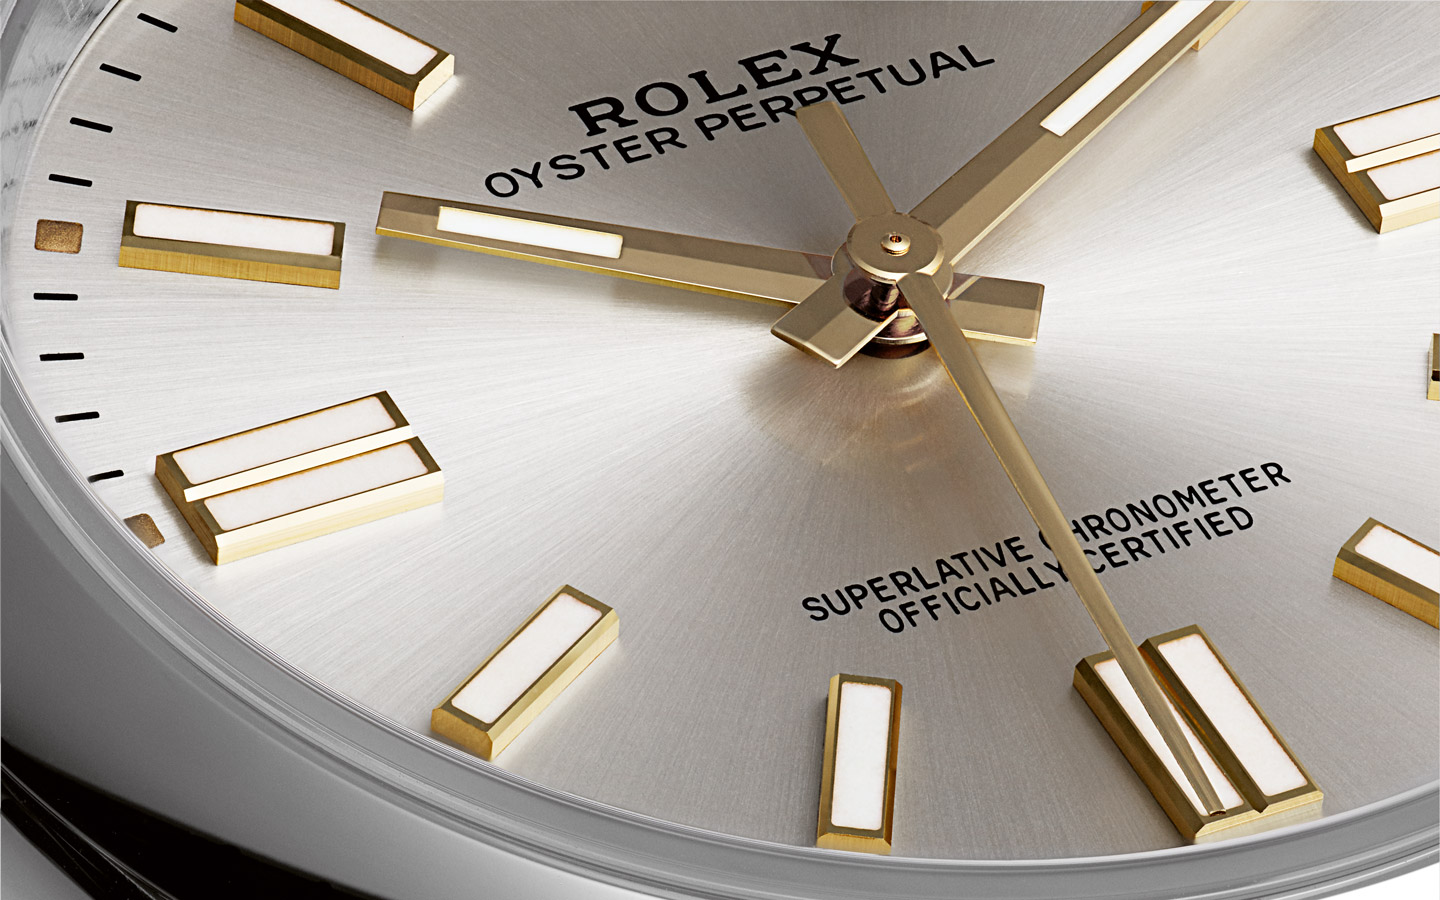 Rolex Oyster Perpetual, certificación de cronómetro superlativo